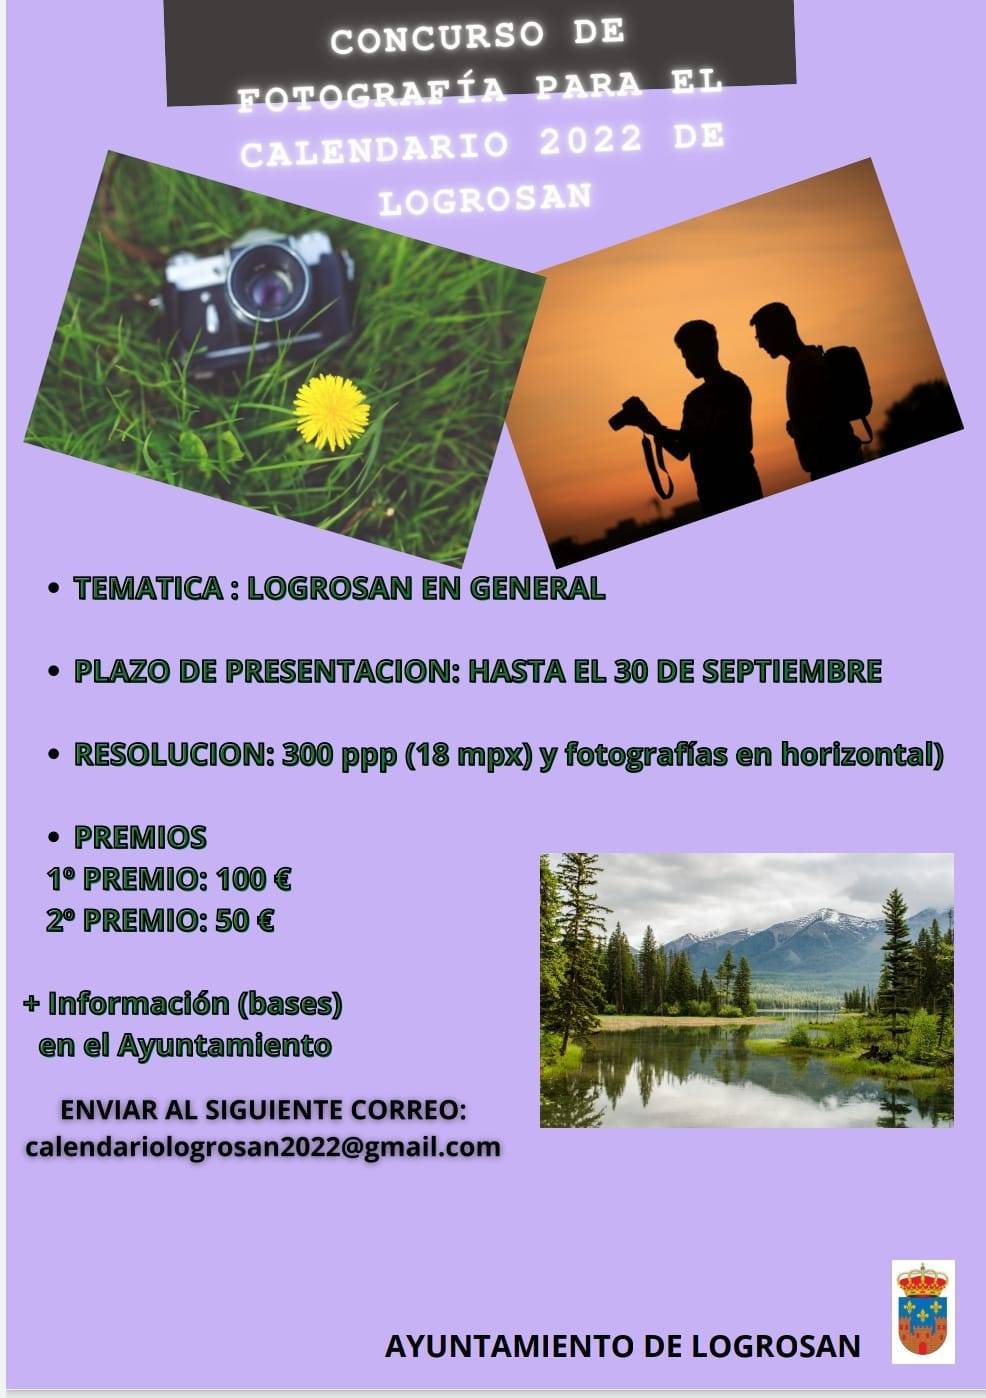 Concurso de fotografía para el calendario anual (2021) - Logrosán (Cáceres)